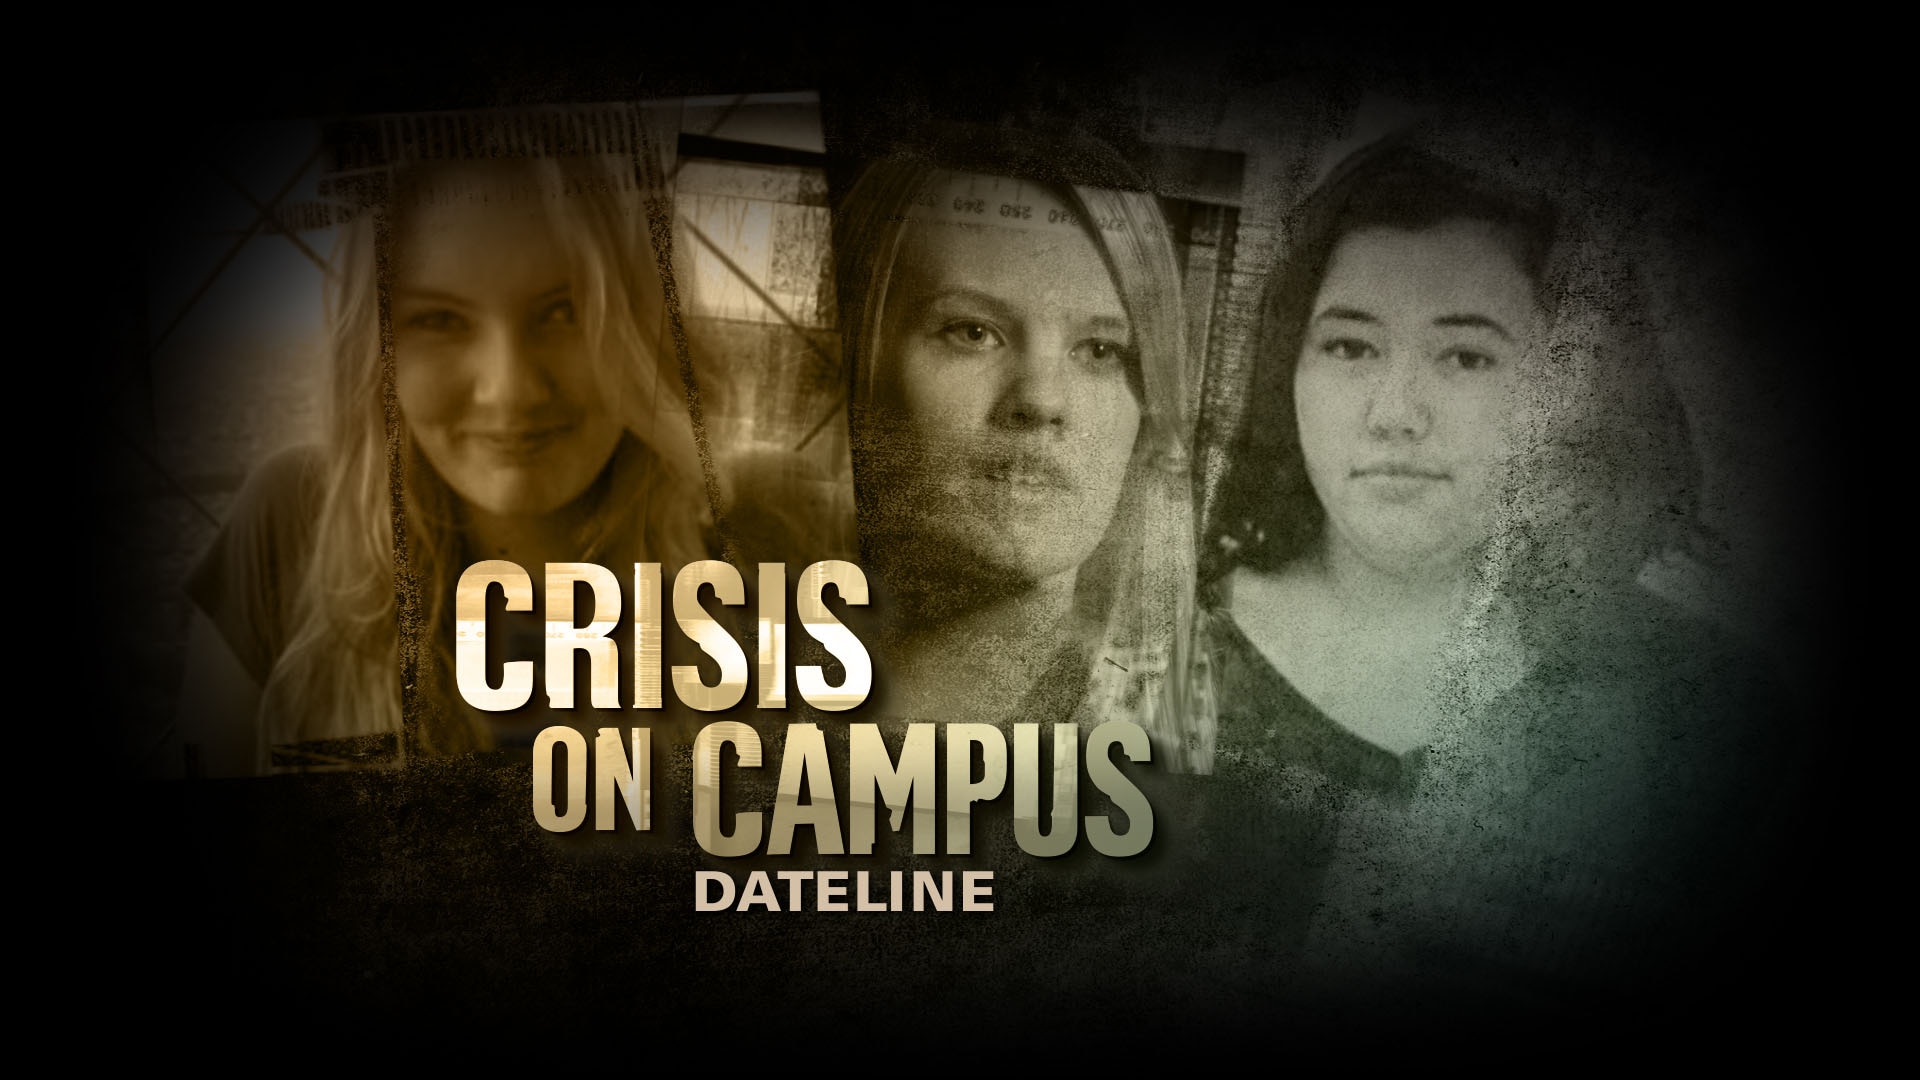 Watch Dateline Episode: Dateline - June 21, 2015 - NBC.com